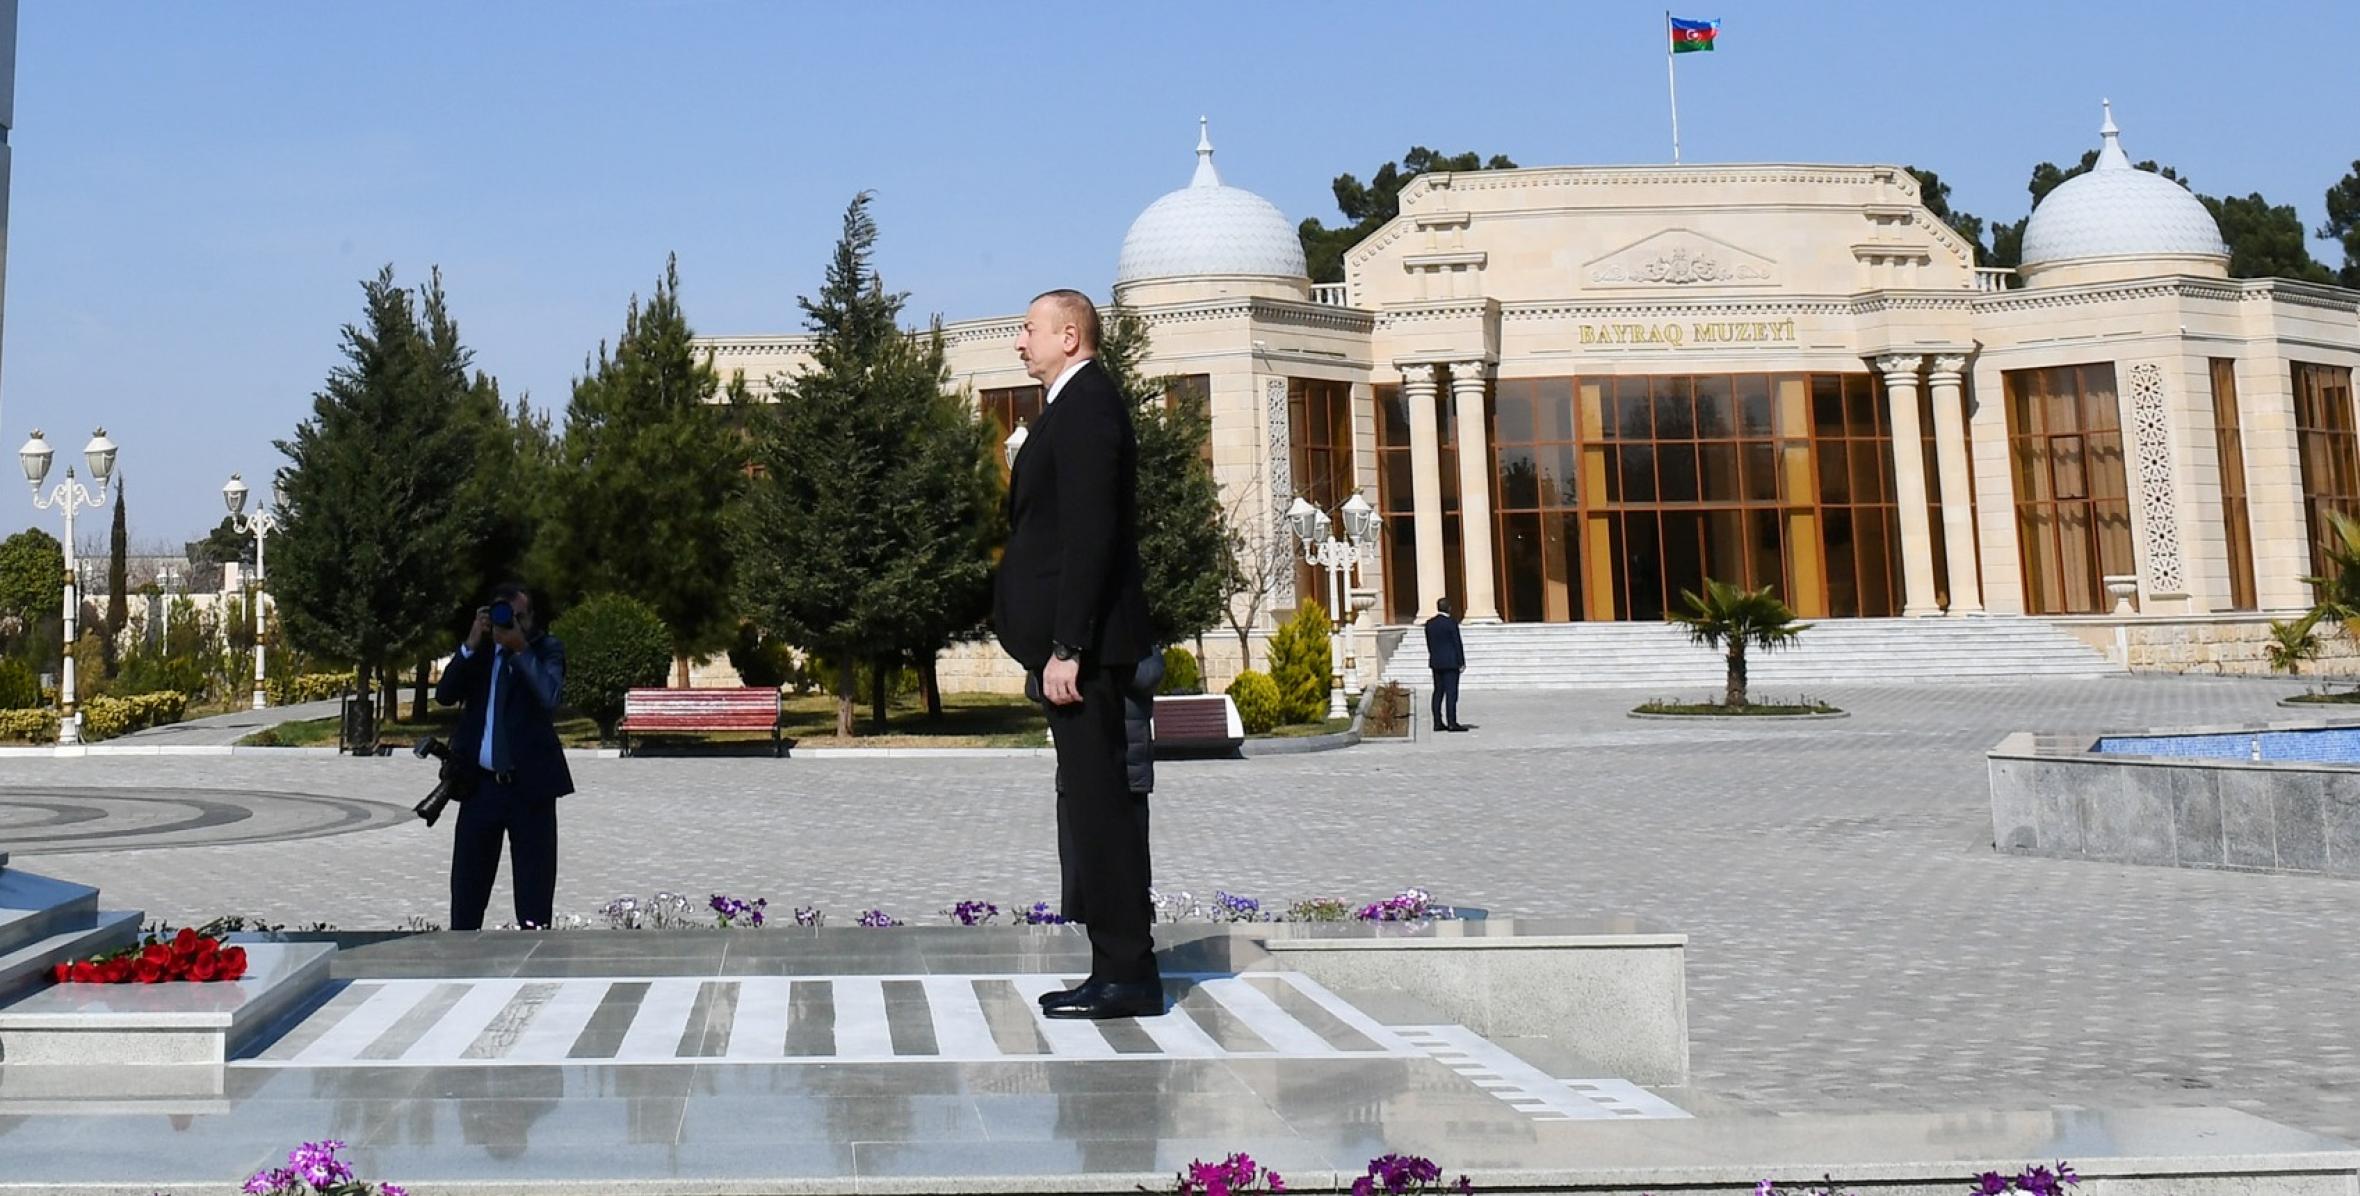 Ilham Aliyev arrived in Goranboy district for visit